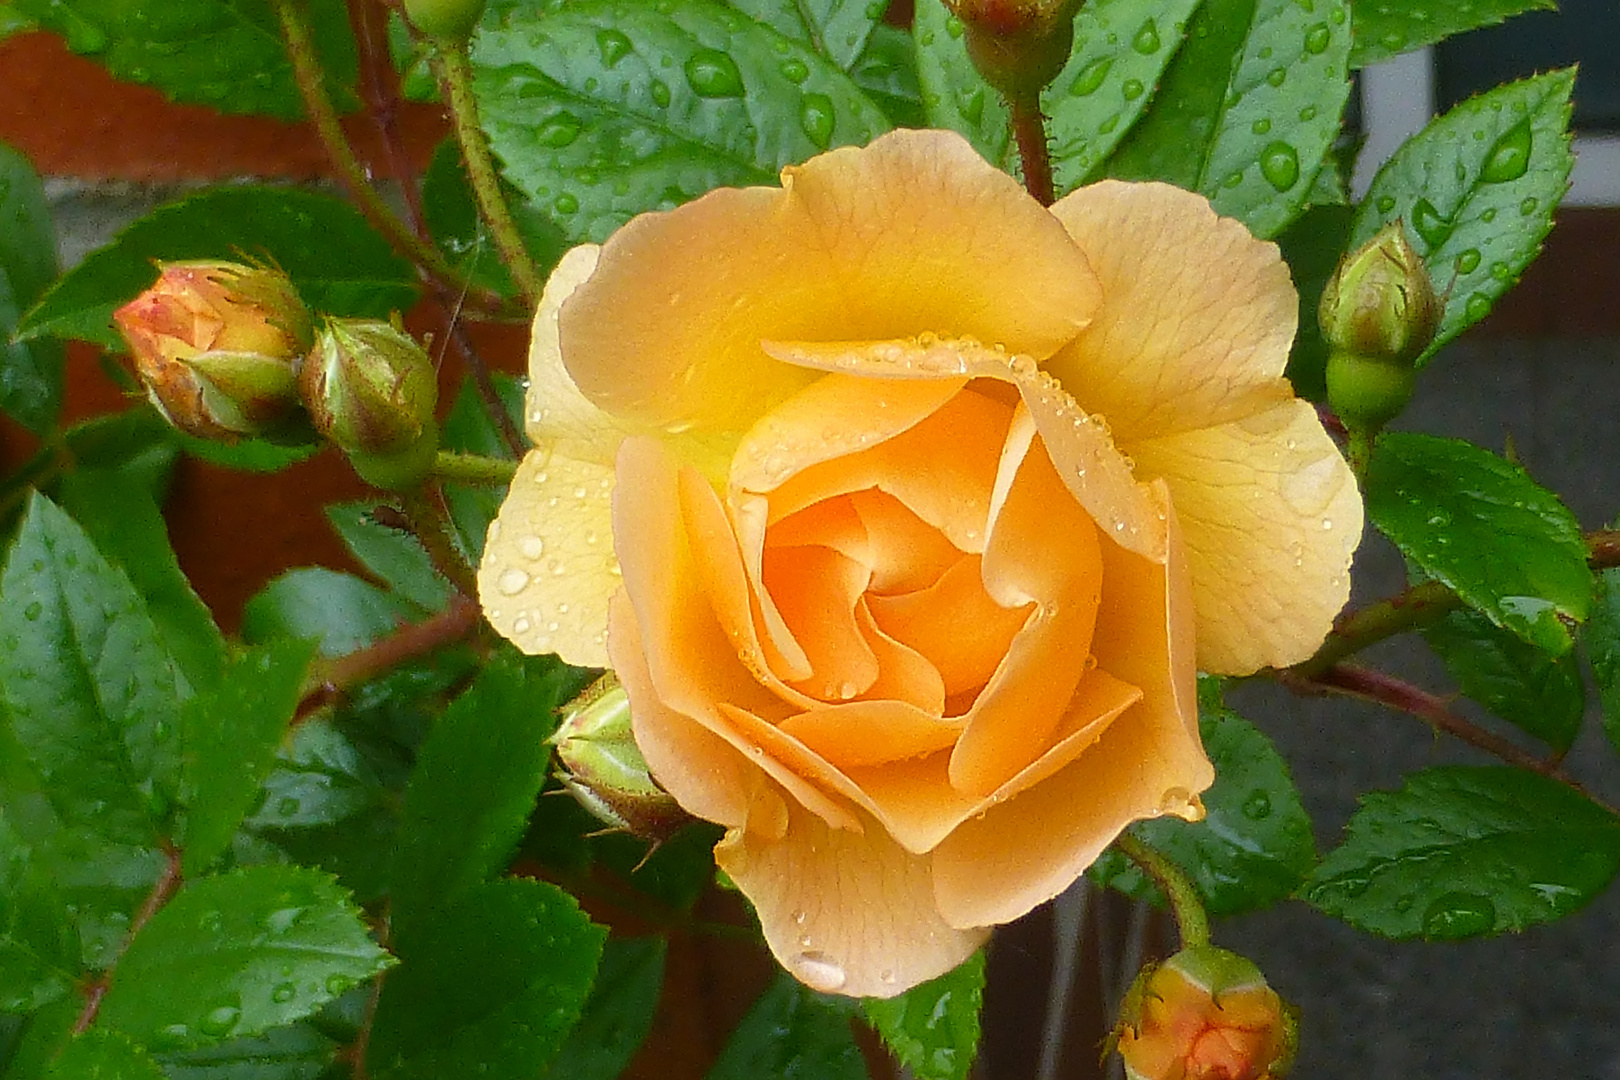 Die erste Rose in diesem Jahr...